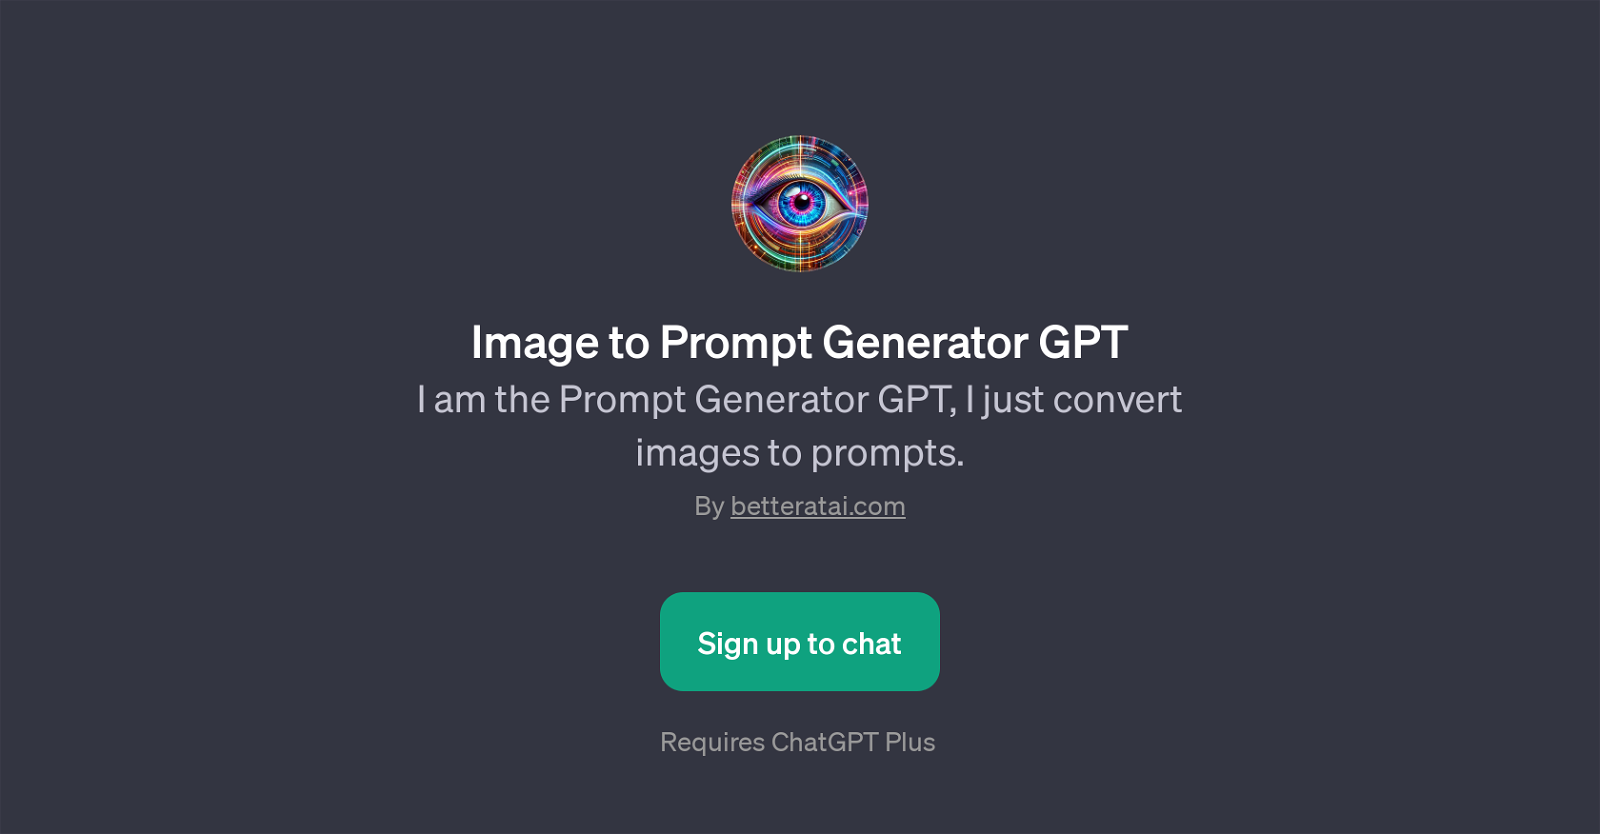 Image to Prompt Generator GPT website